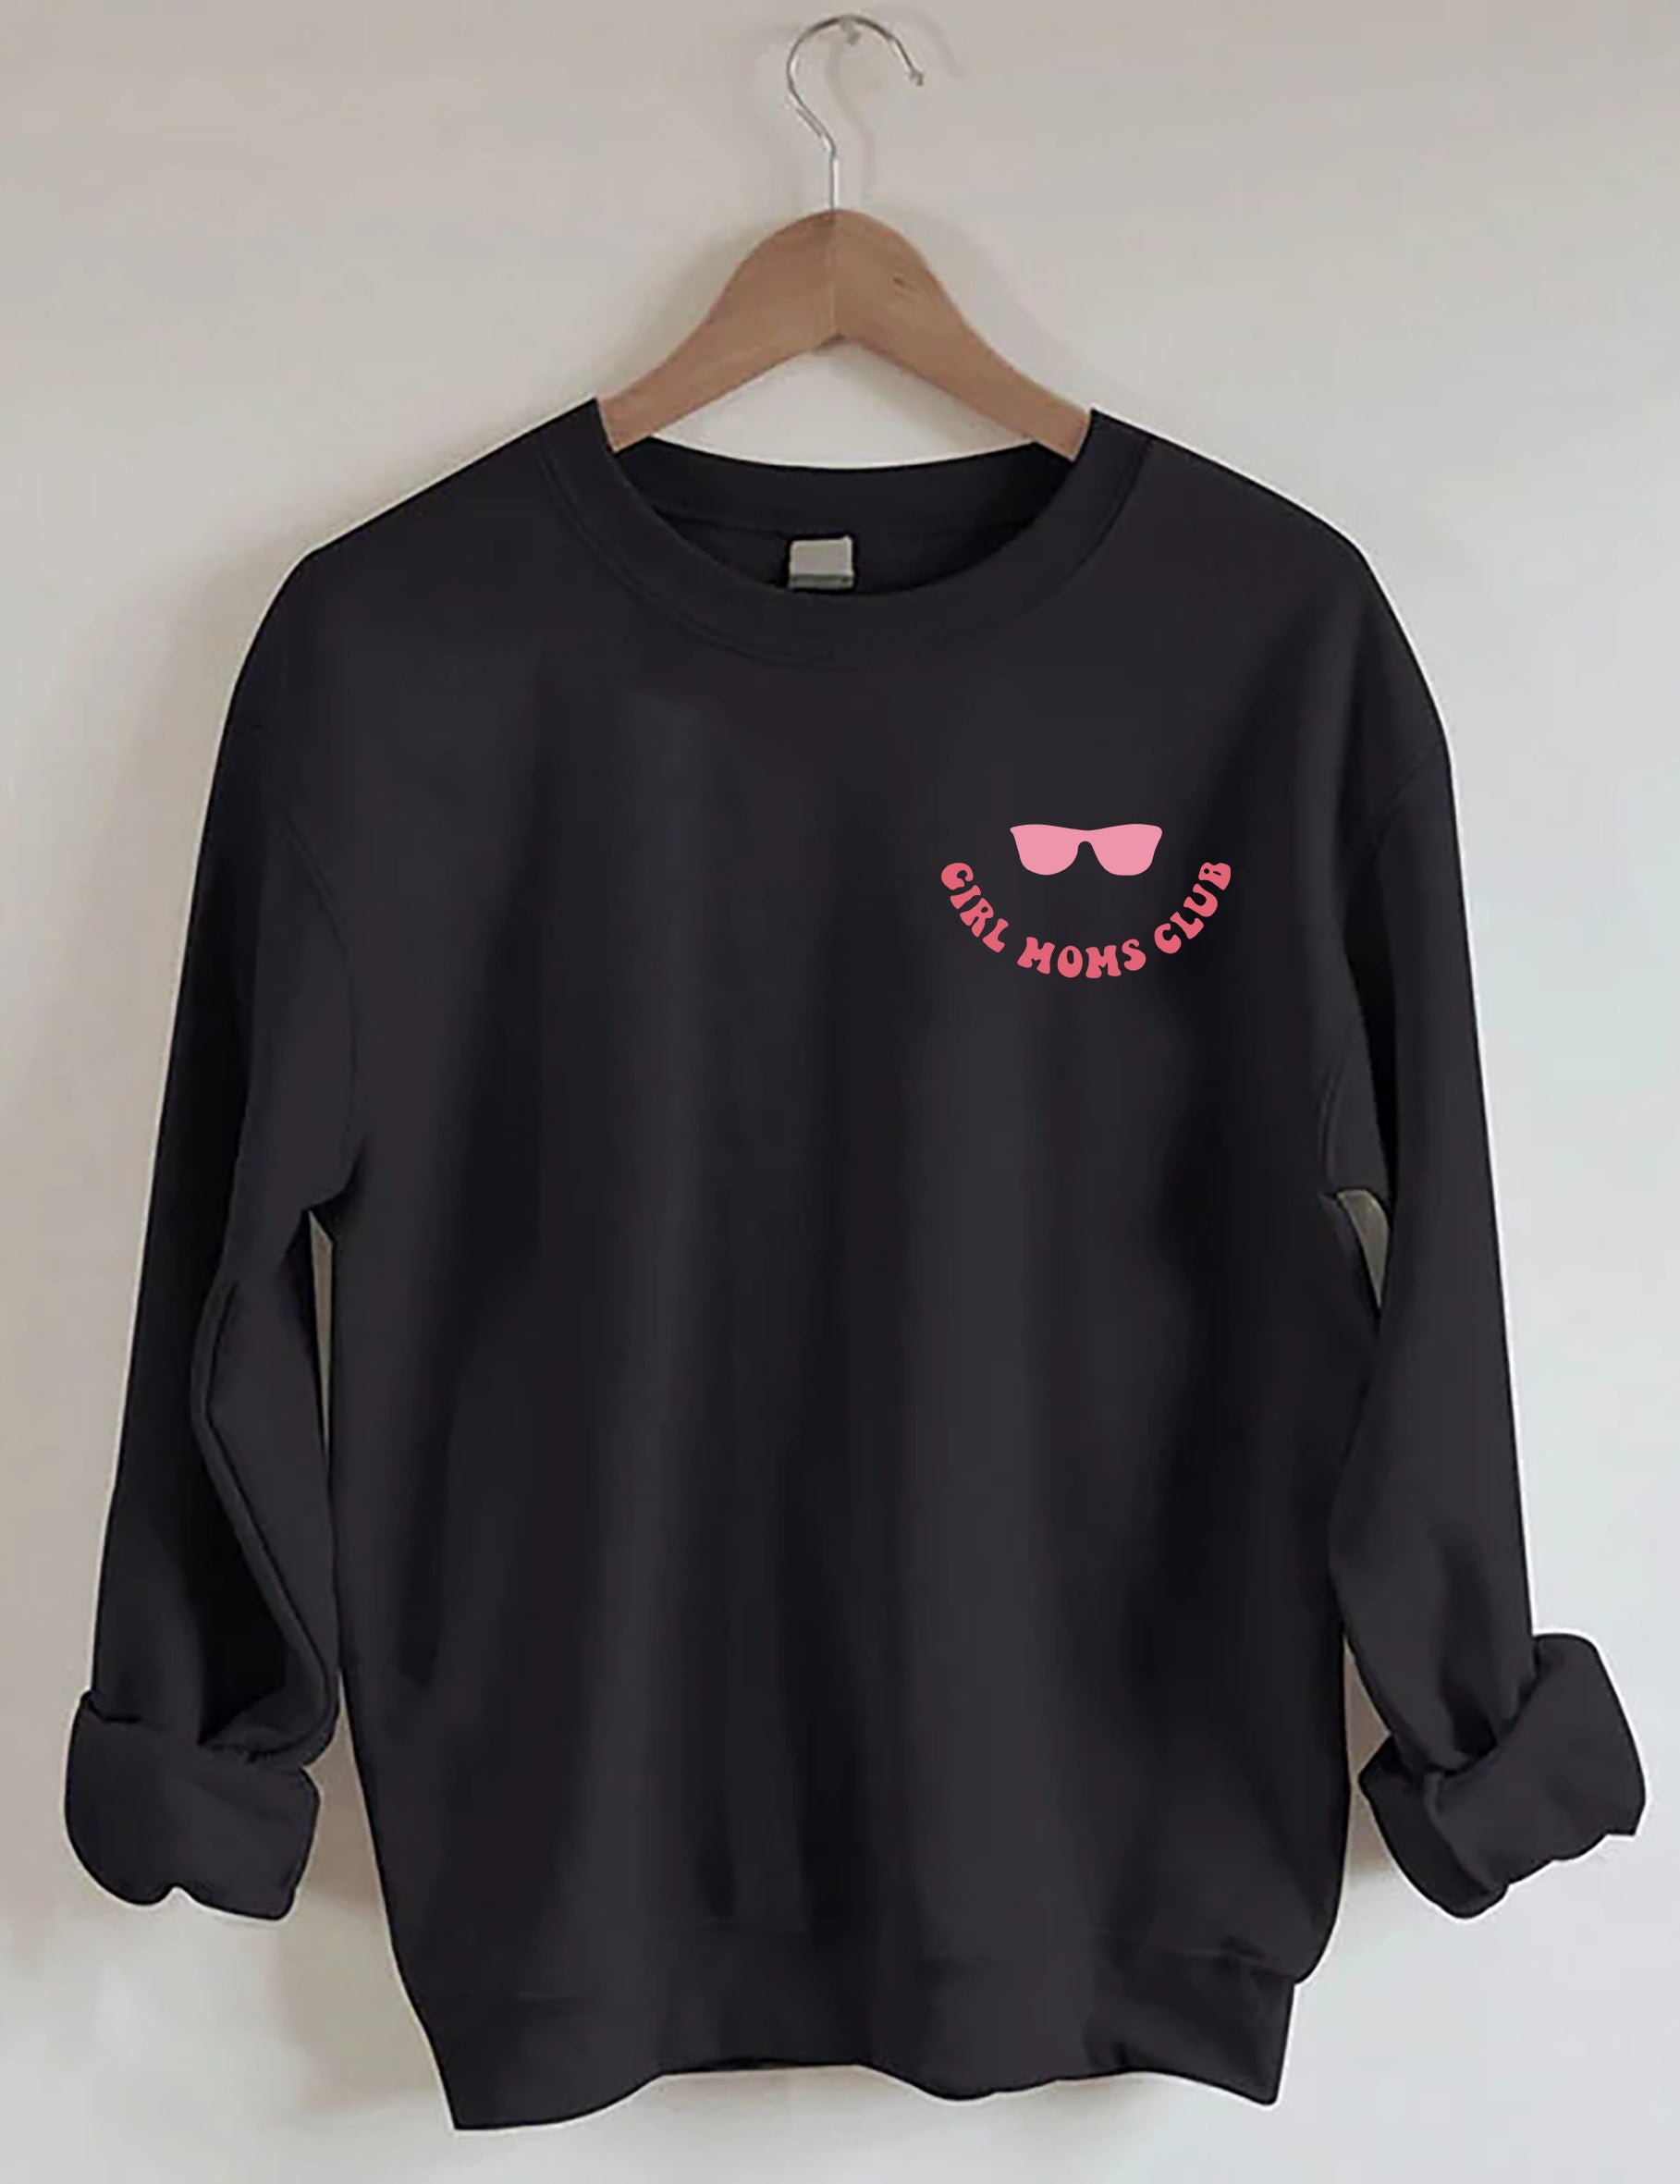 Girl Moms Club Sweatshirt